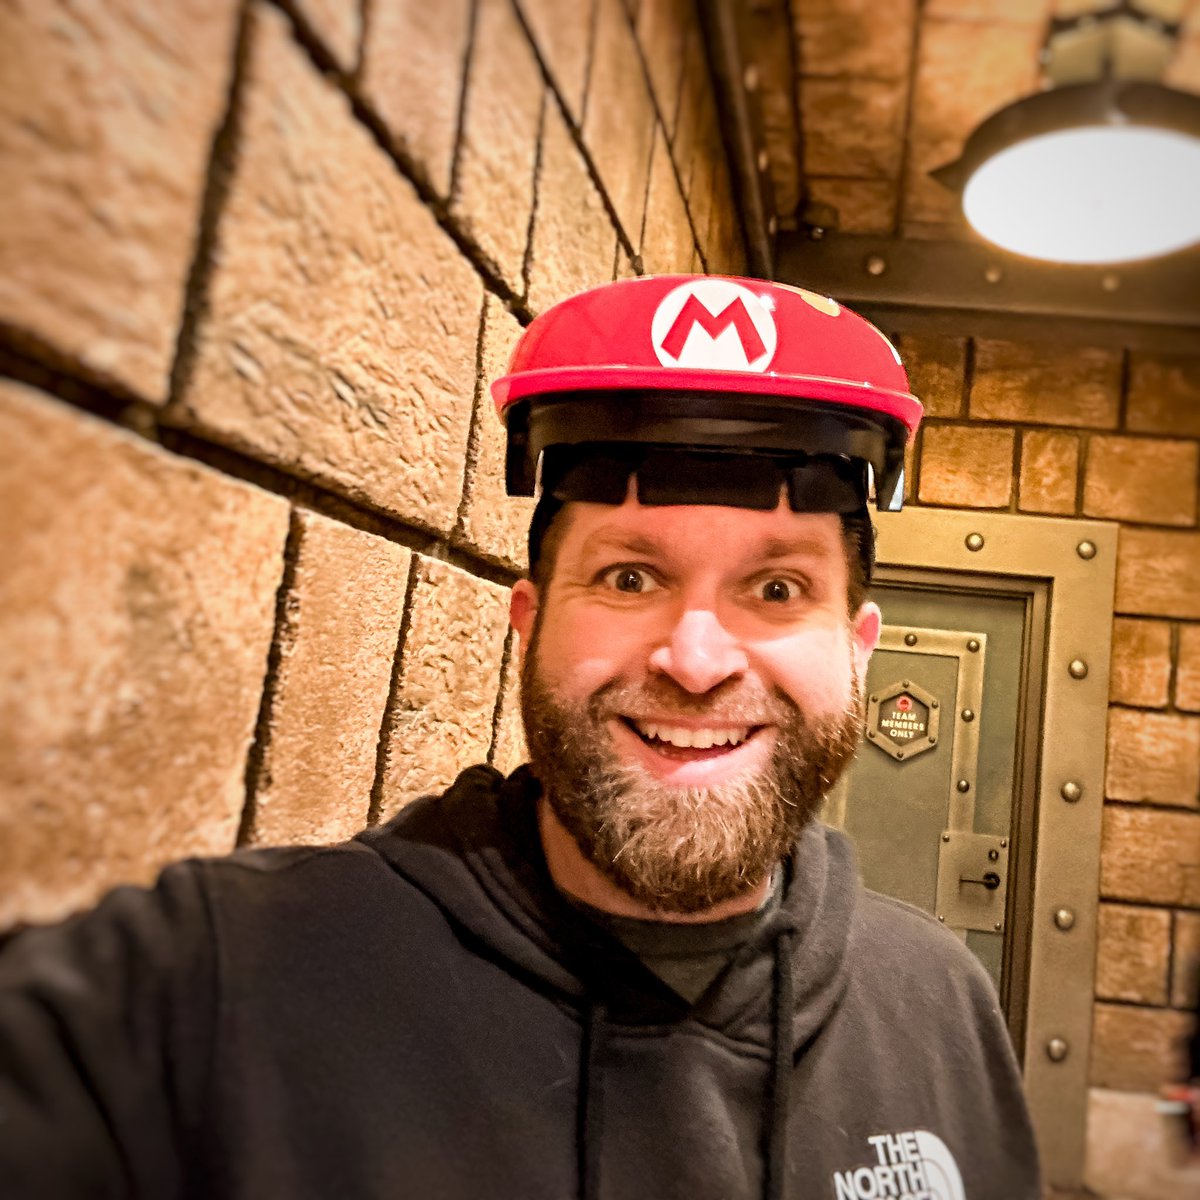 The Mario Kart visor hats are so stylish! 🤣 

#universalstudios #universalorlando #supernintendoworld #supernintendo #mariokart #themepark #rollercoaster #amusementpark #photography